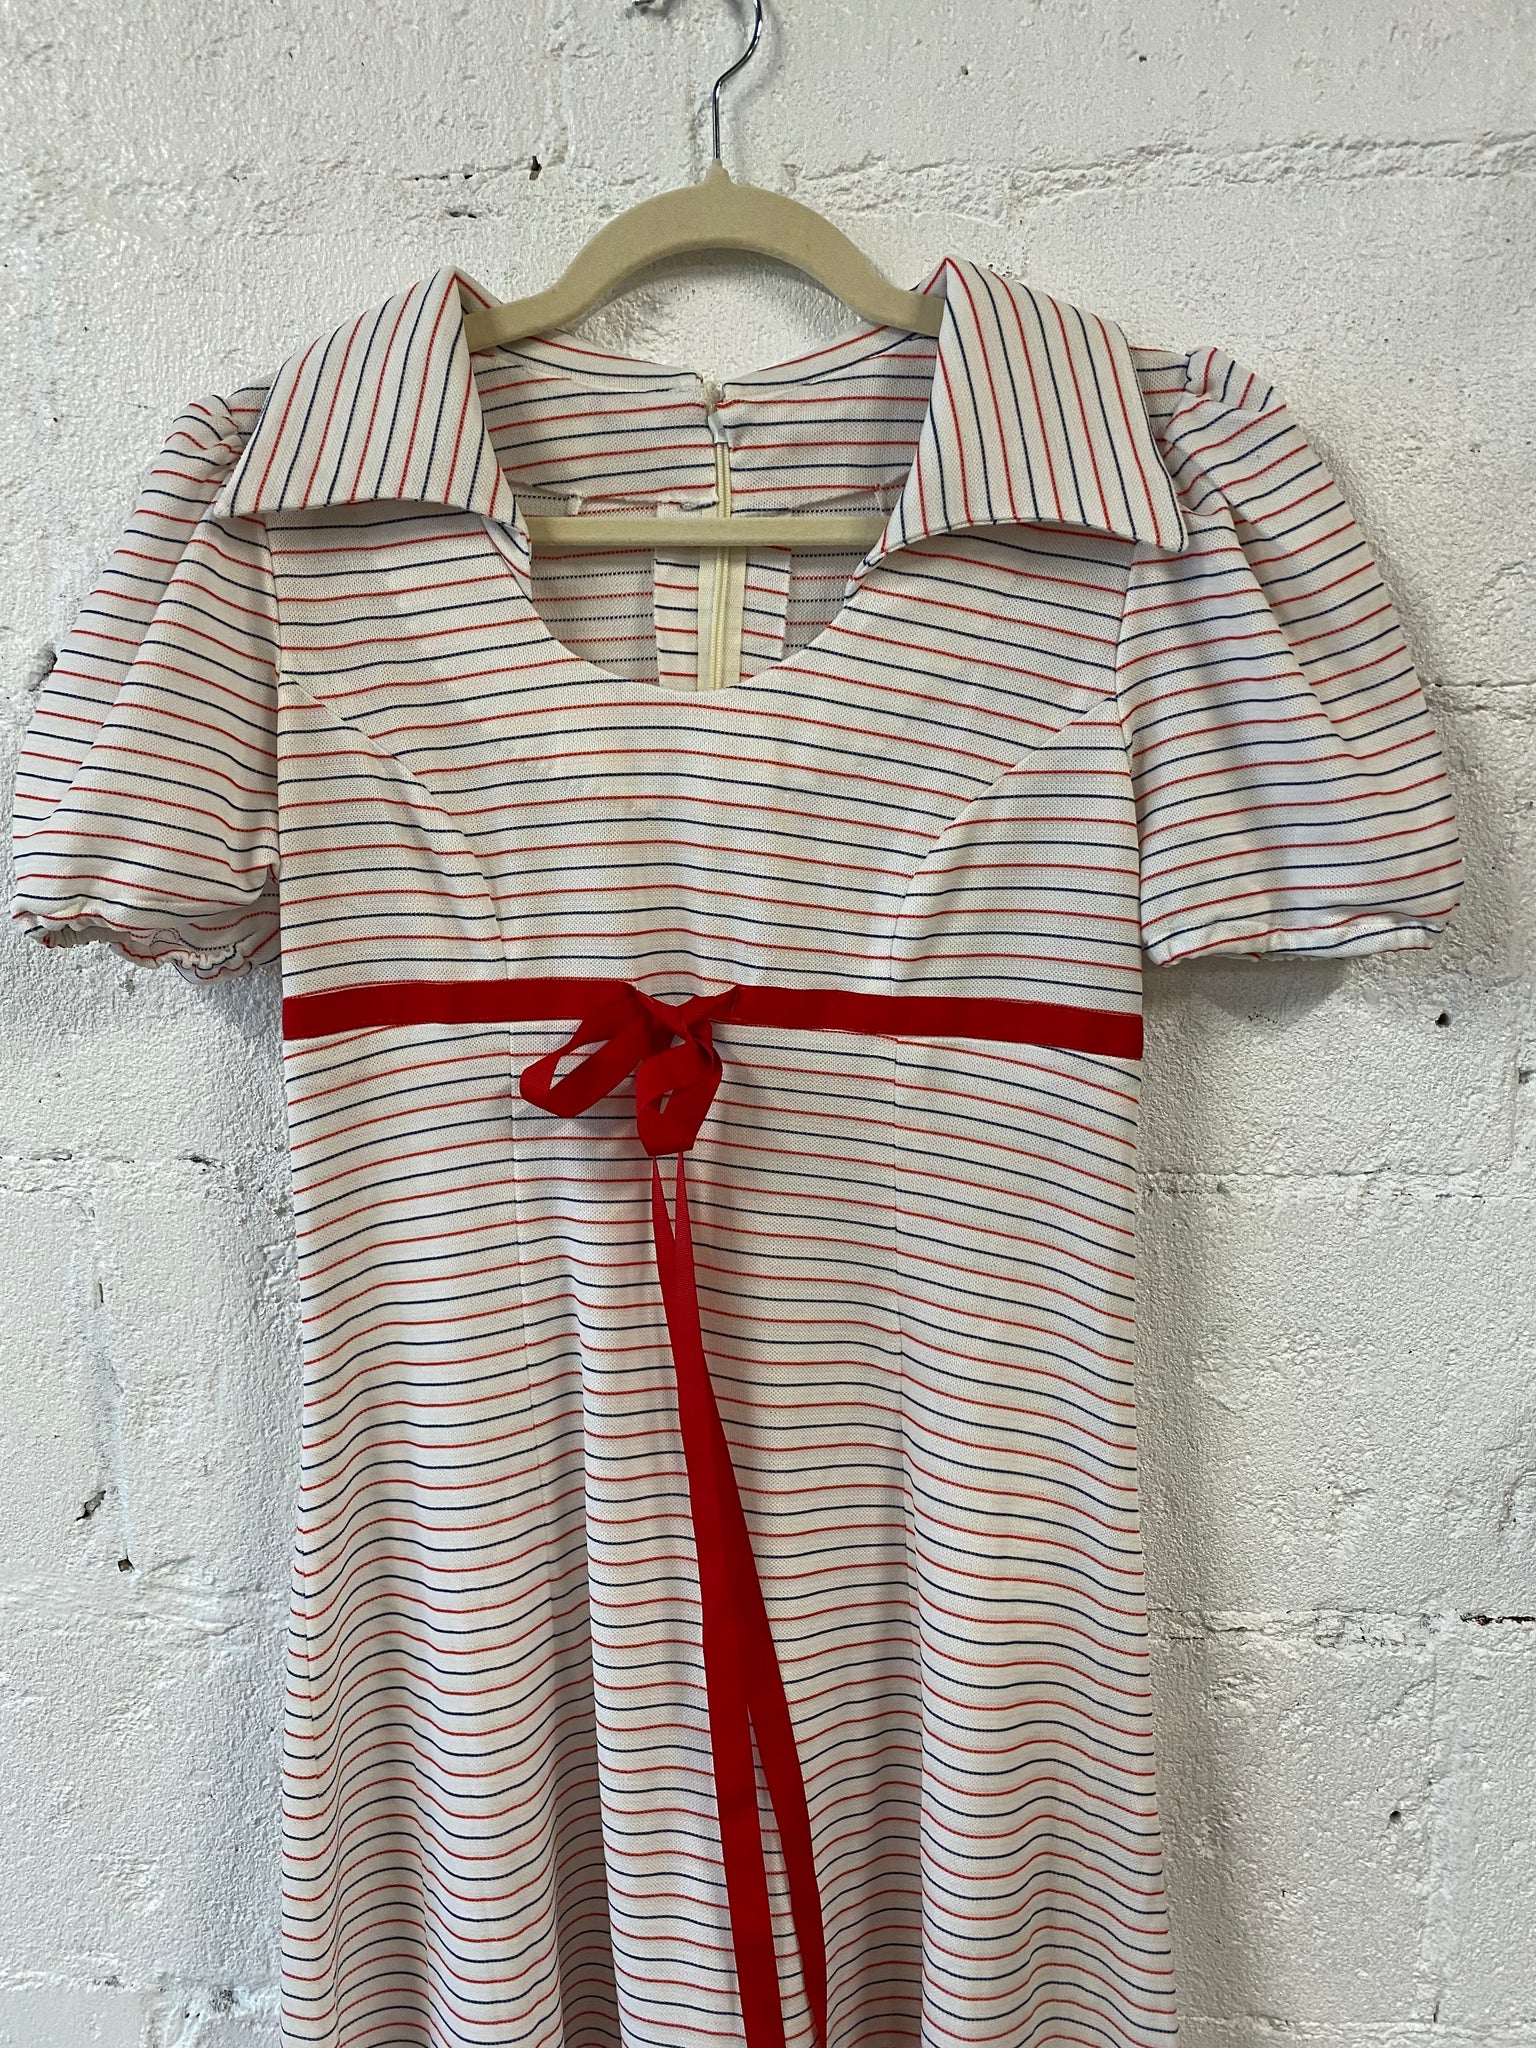 60's Handmade Striped Dress